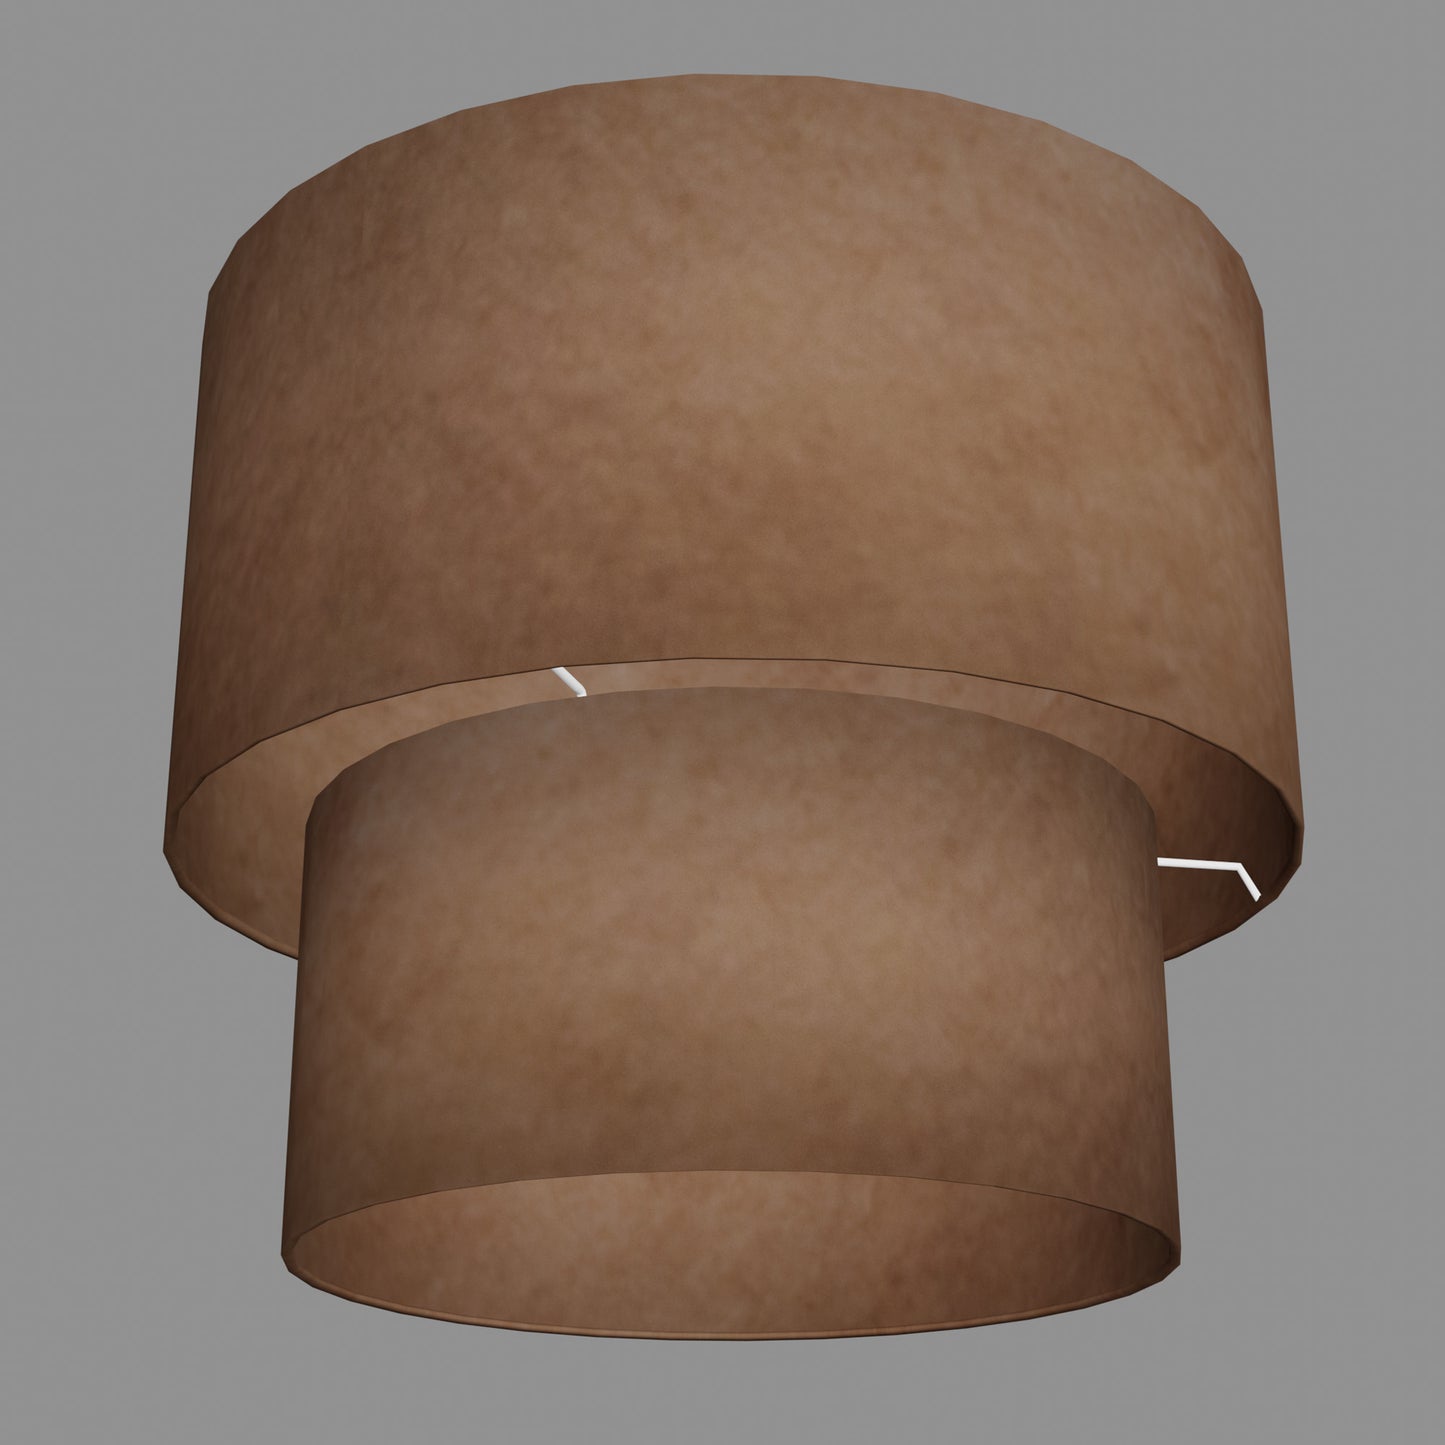 2 Tier Lamp Shade - P58 - Brown Lokta, 40cm x 20cm & 30cm x 15cm